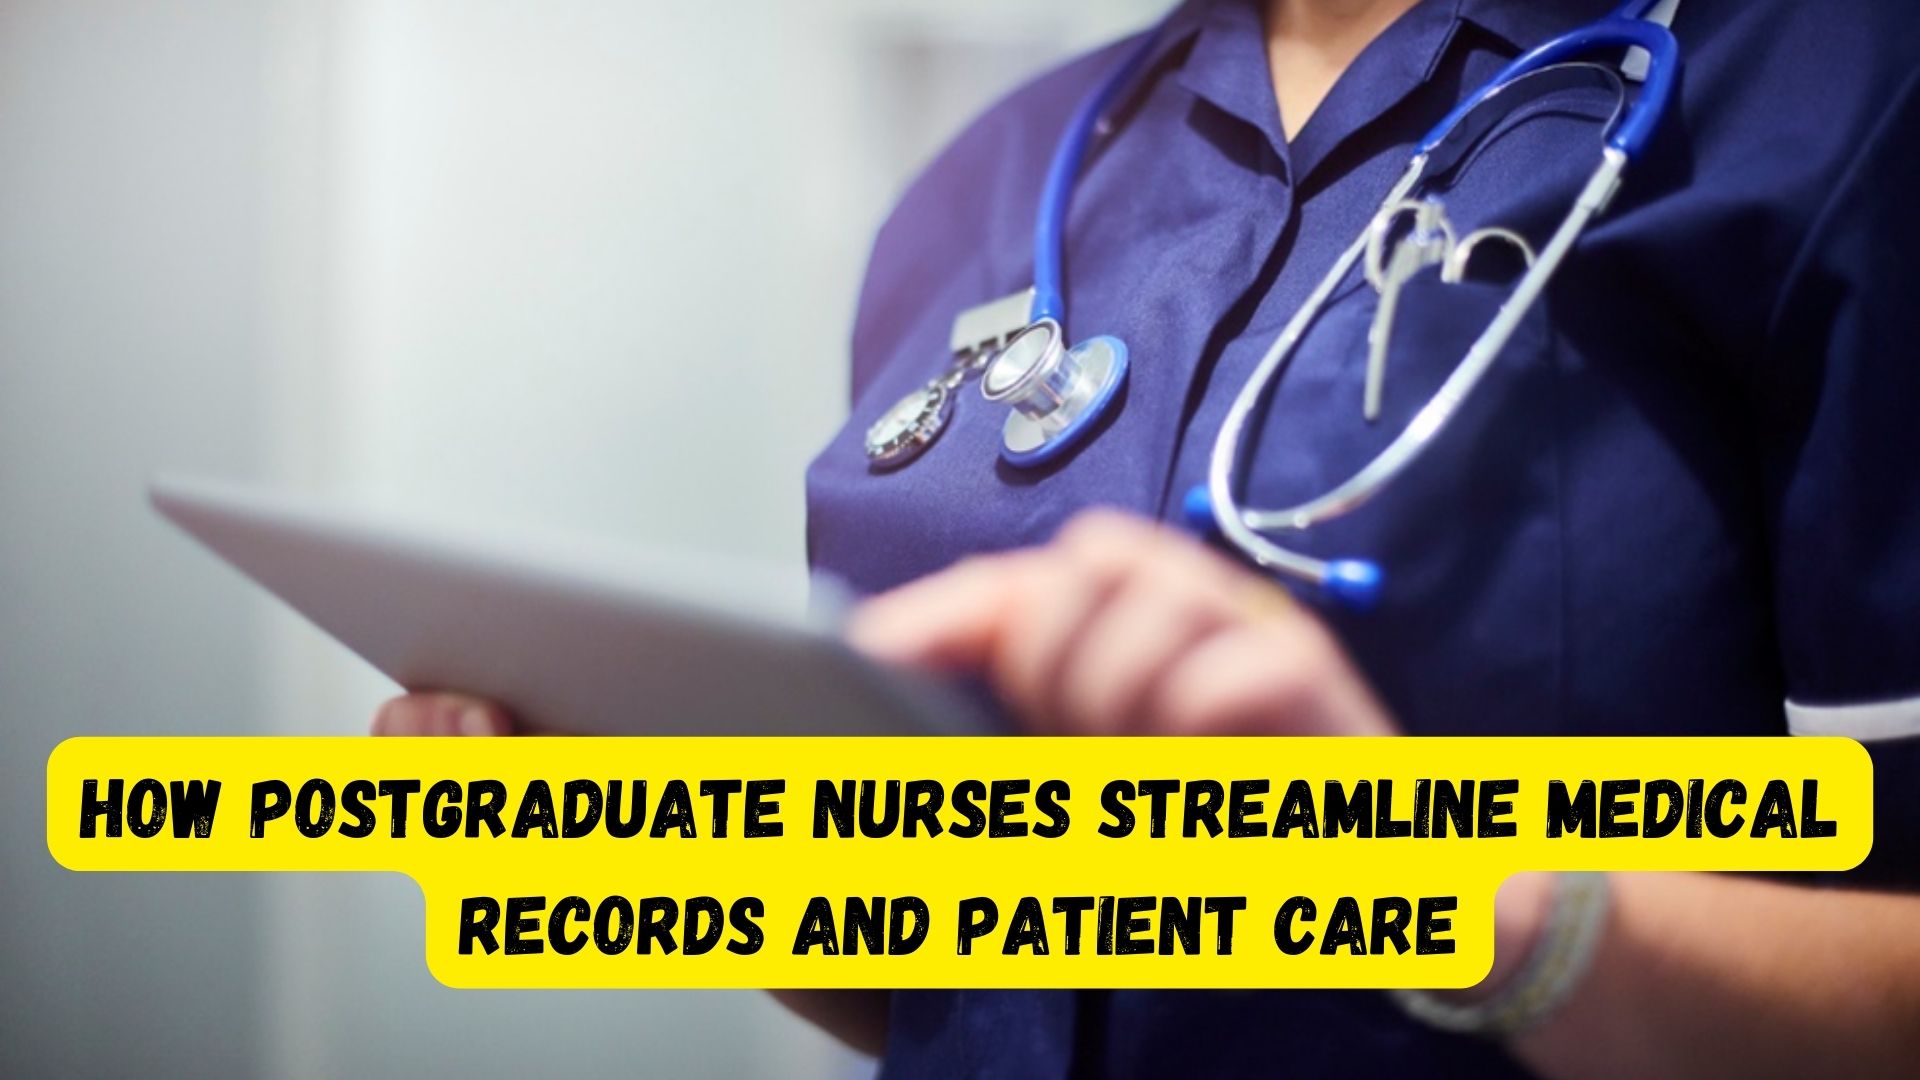 How postgraduate nurses streamline medical records and patient care